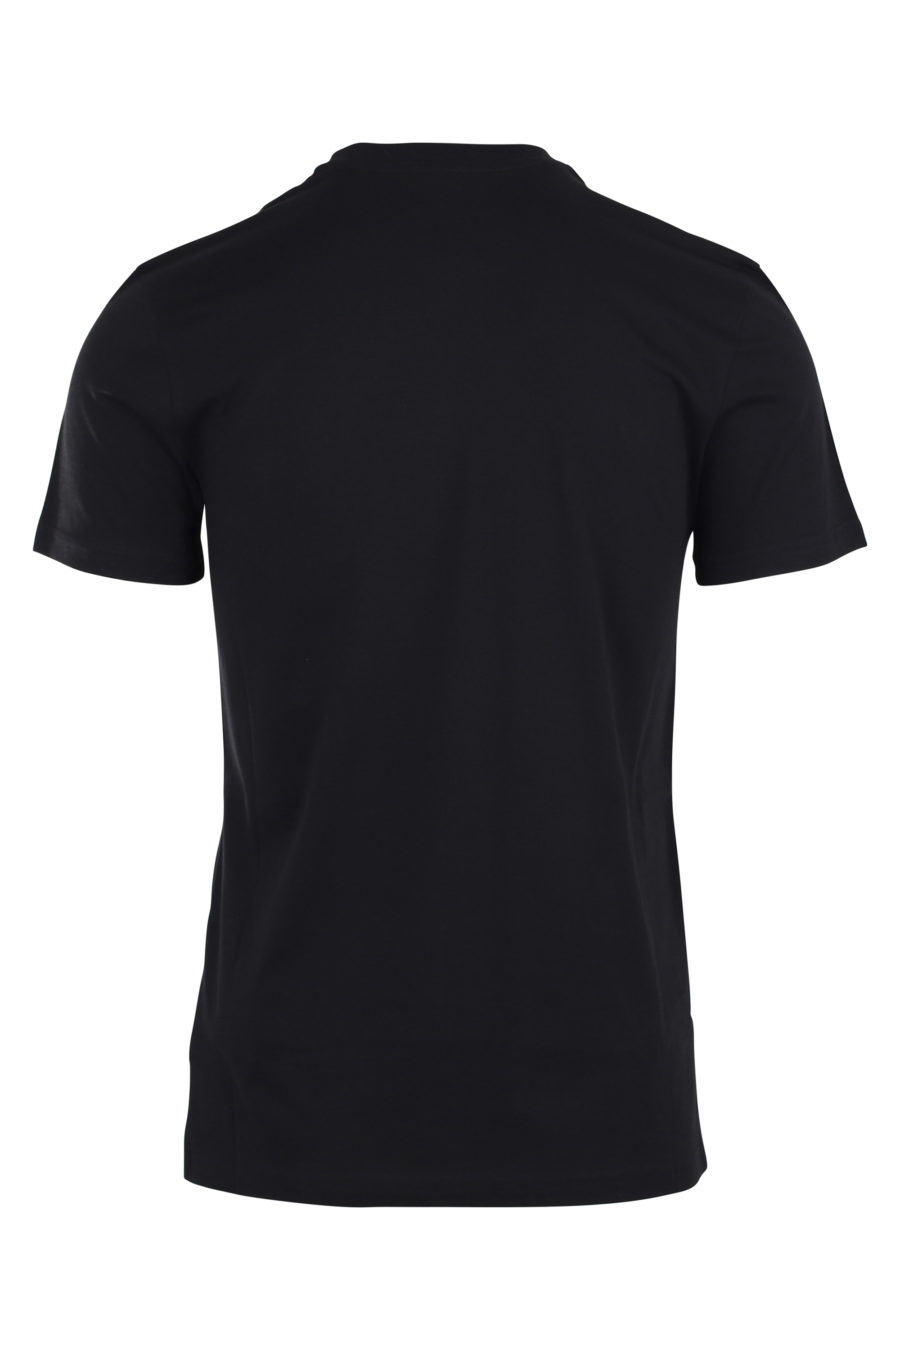 Camiseta negra con logo milano - IMG 9863